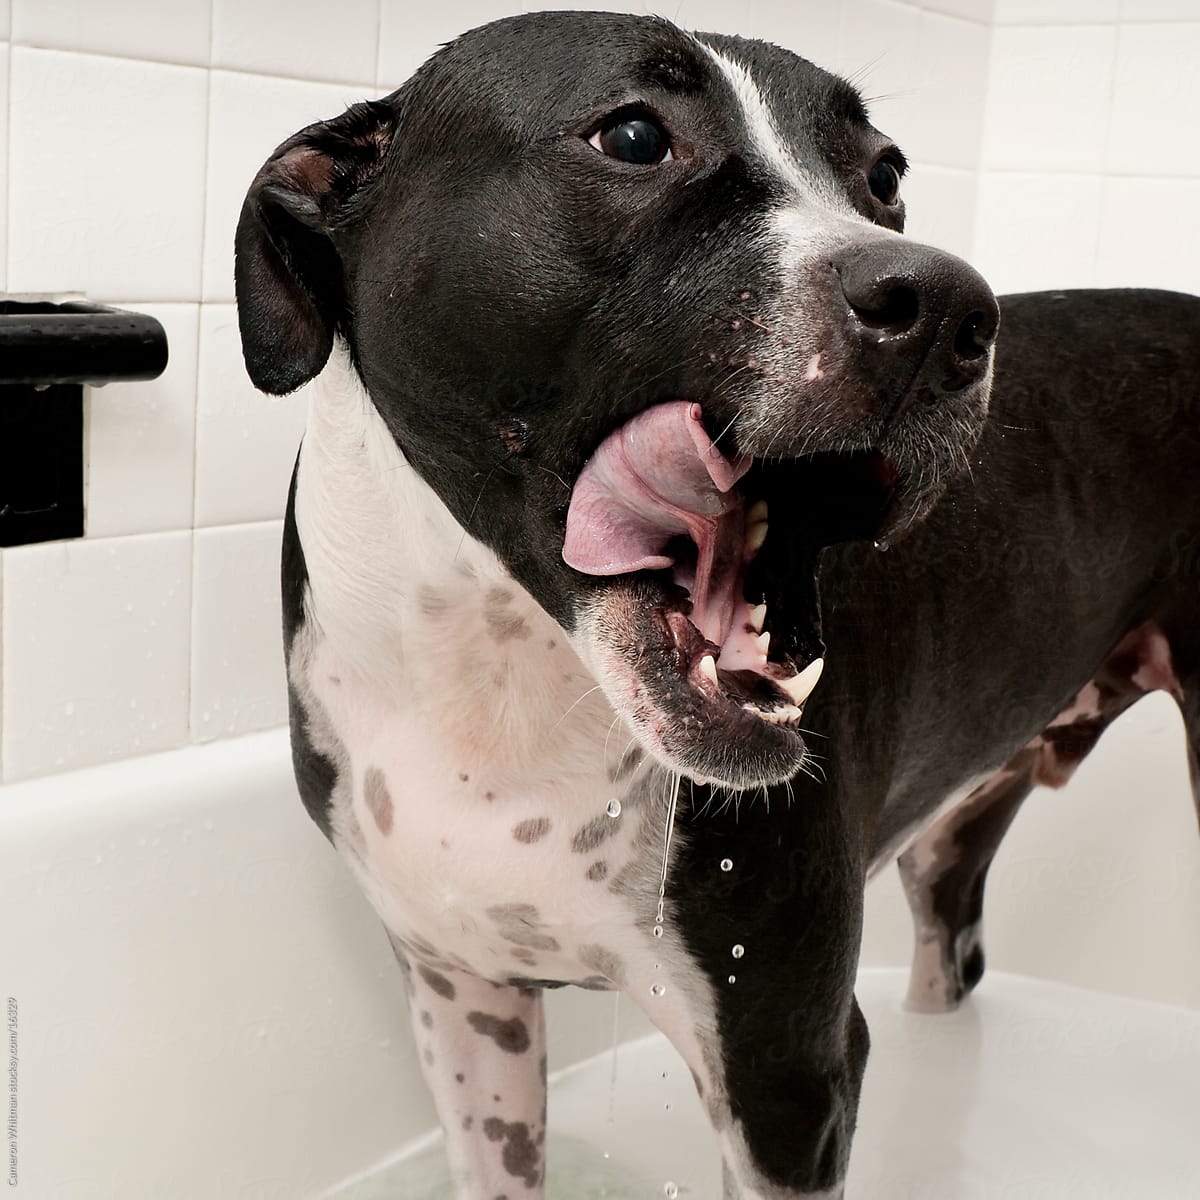 Large pitbull dog licking his chops during a bath.